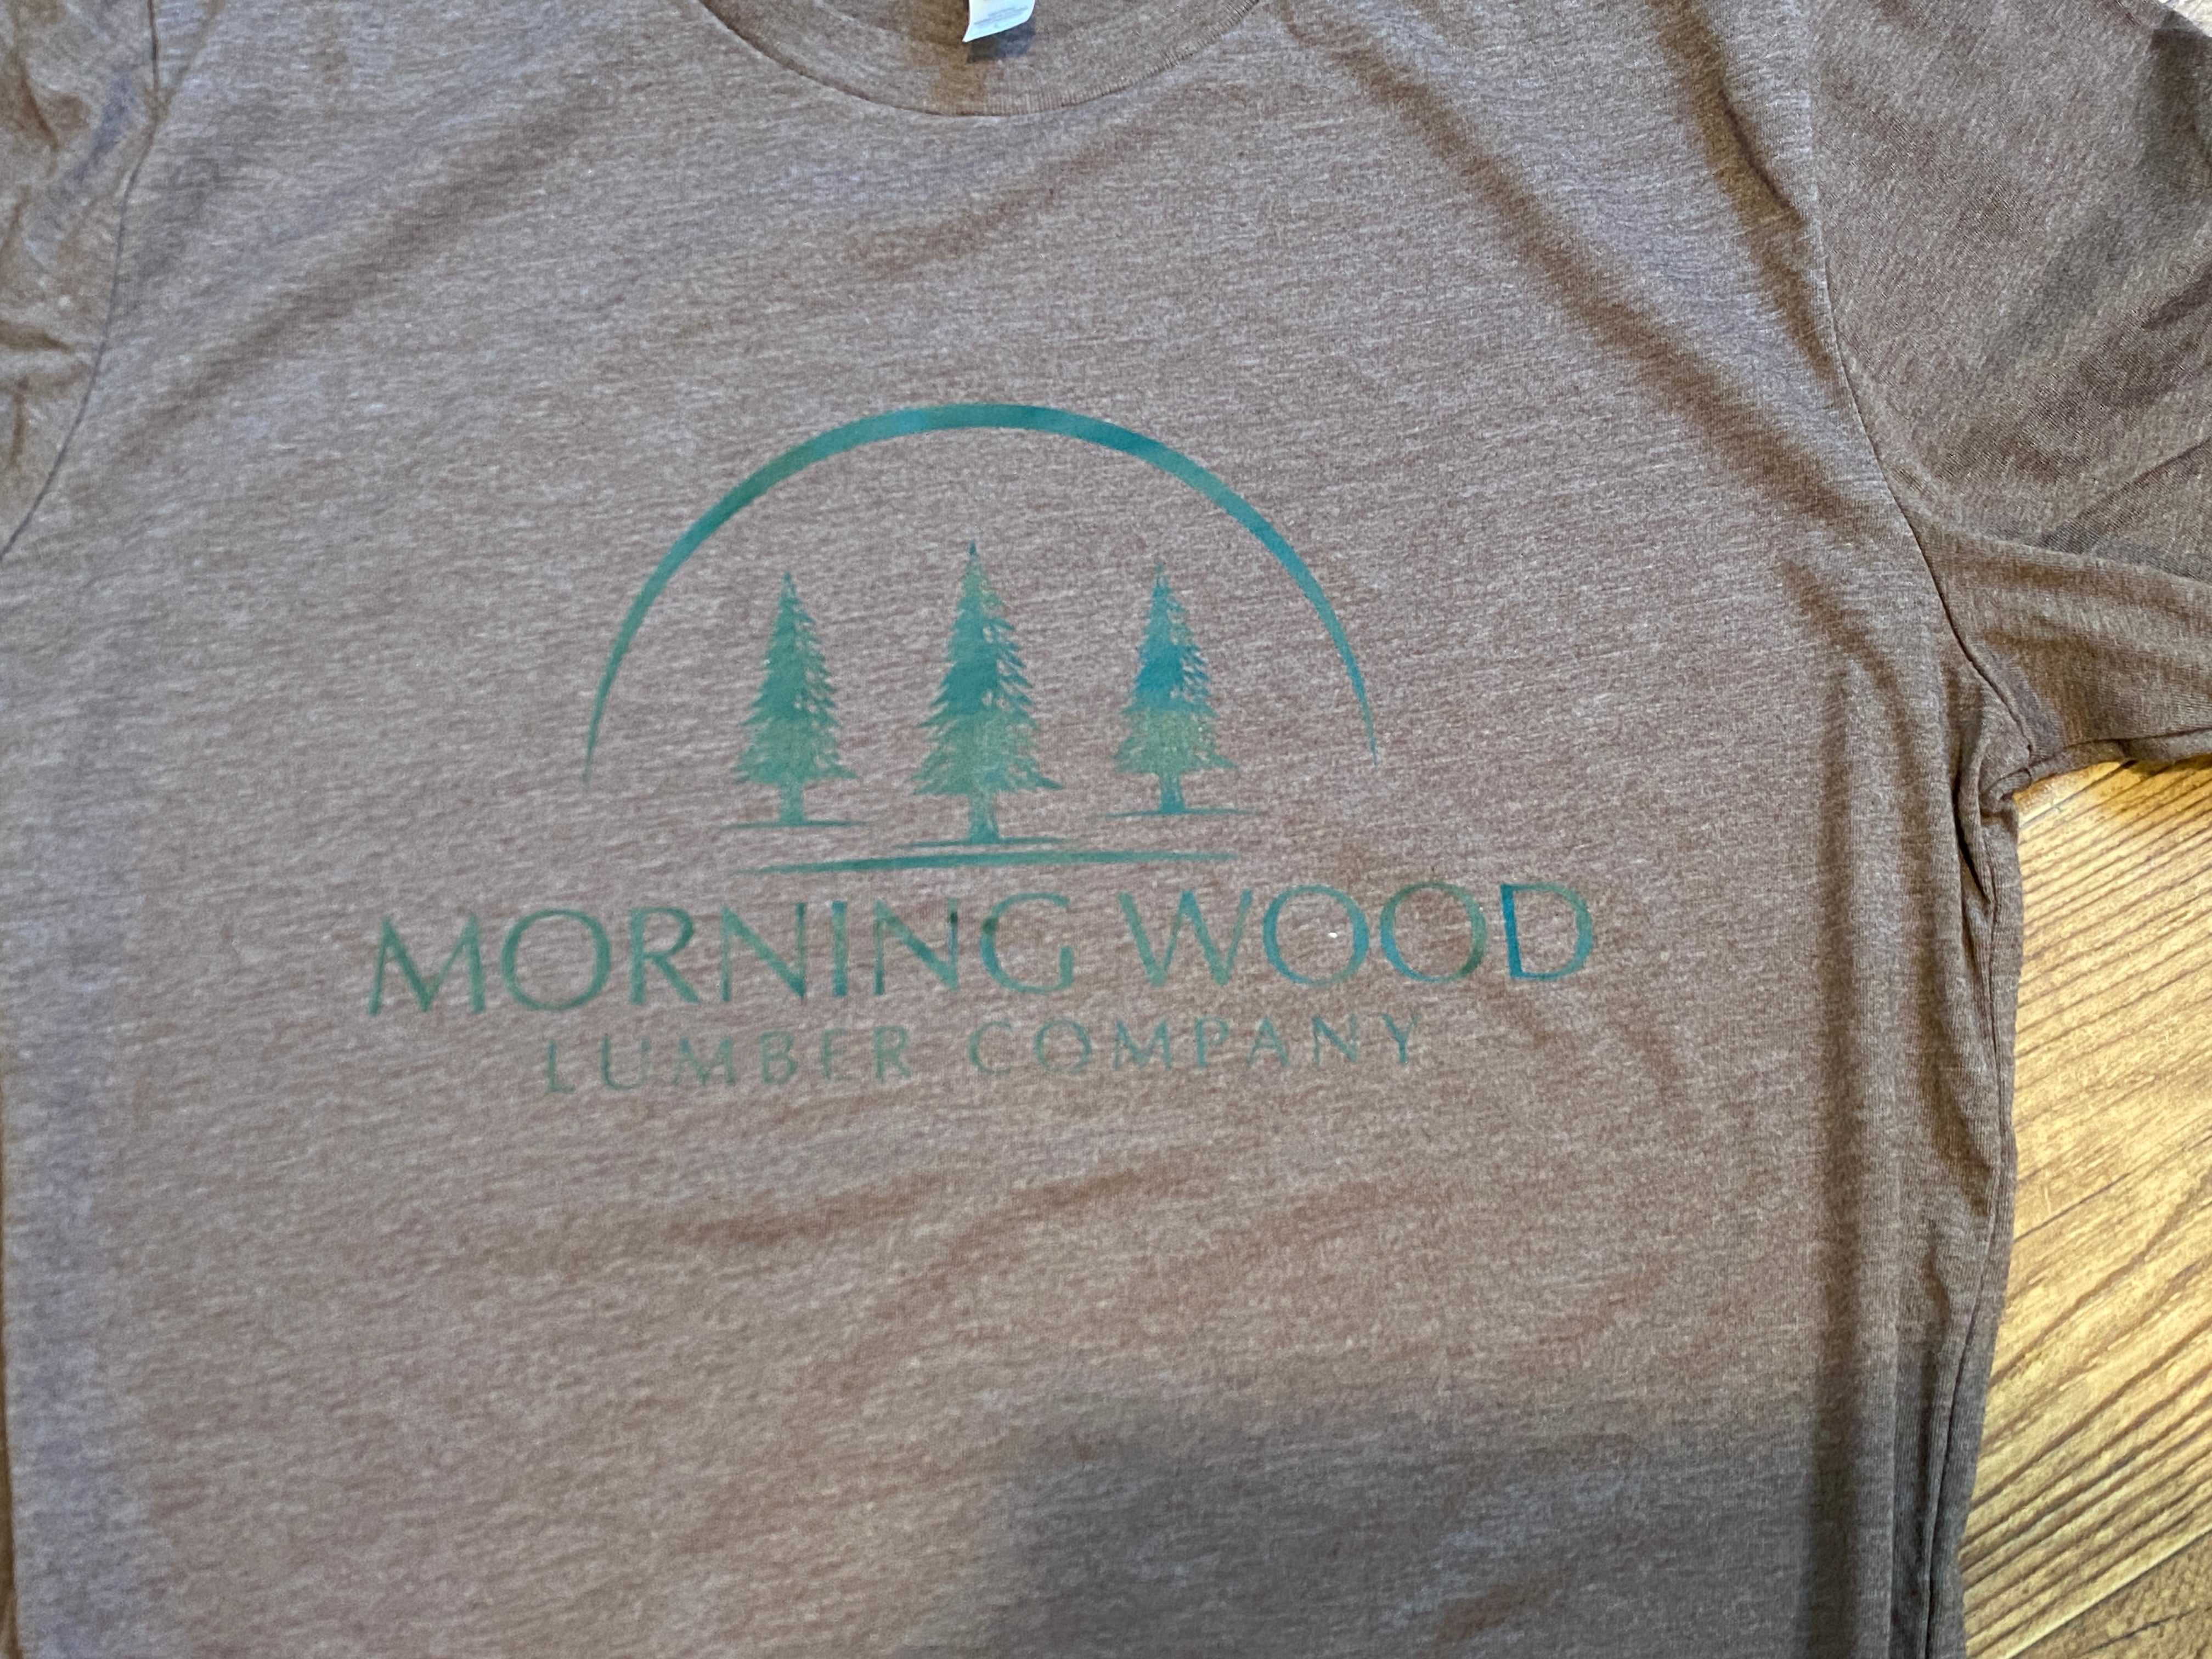 Morning Wood Lumber Company Tee